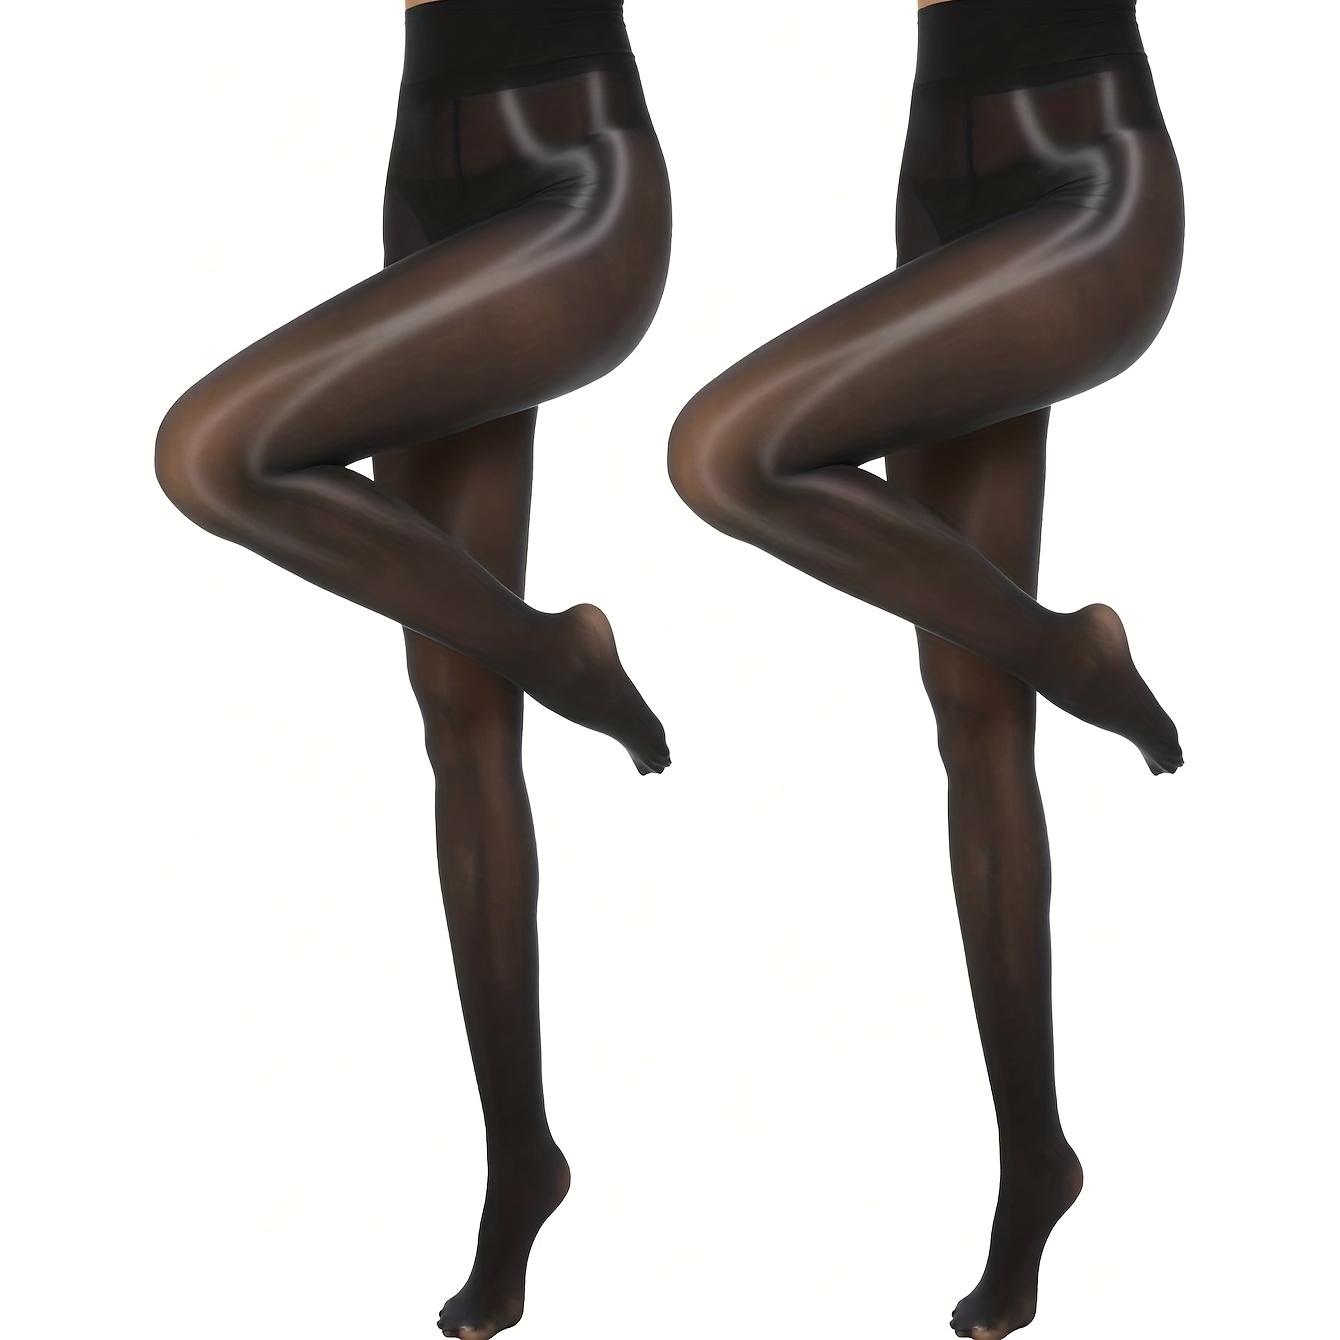 

2 Pairs Women's Oil Shiny Tights, Sexy Glossy High Waist Pantyhose, Ultra Thin Sheer Full-length Stockings